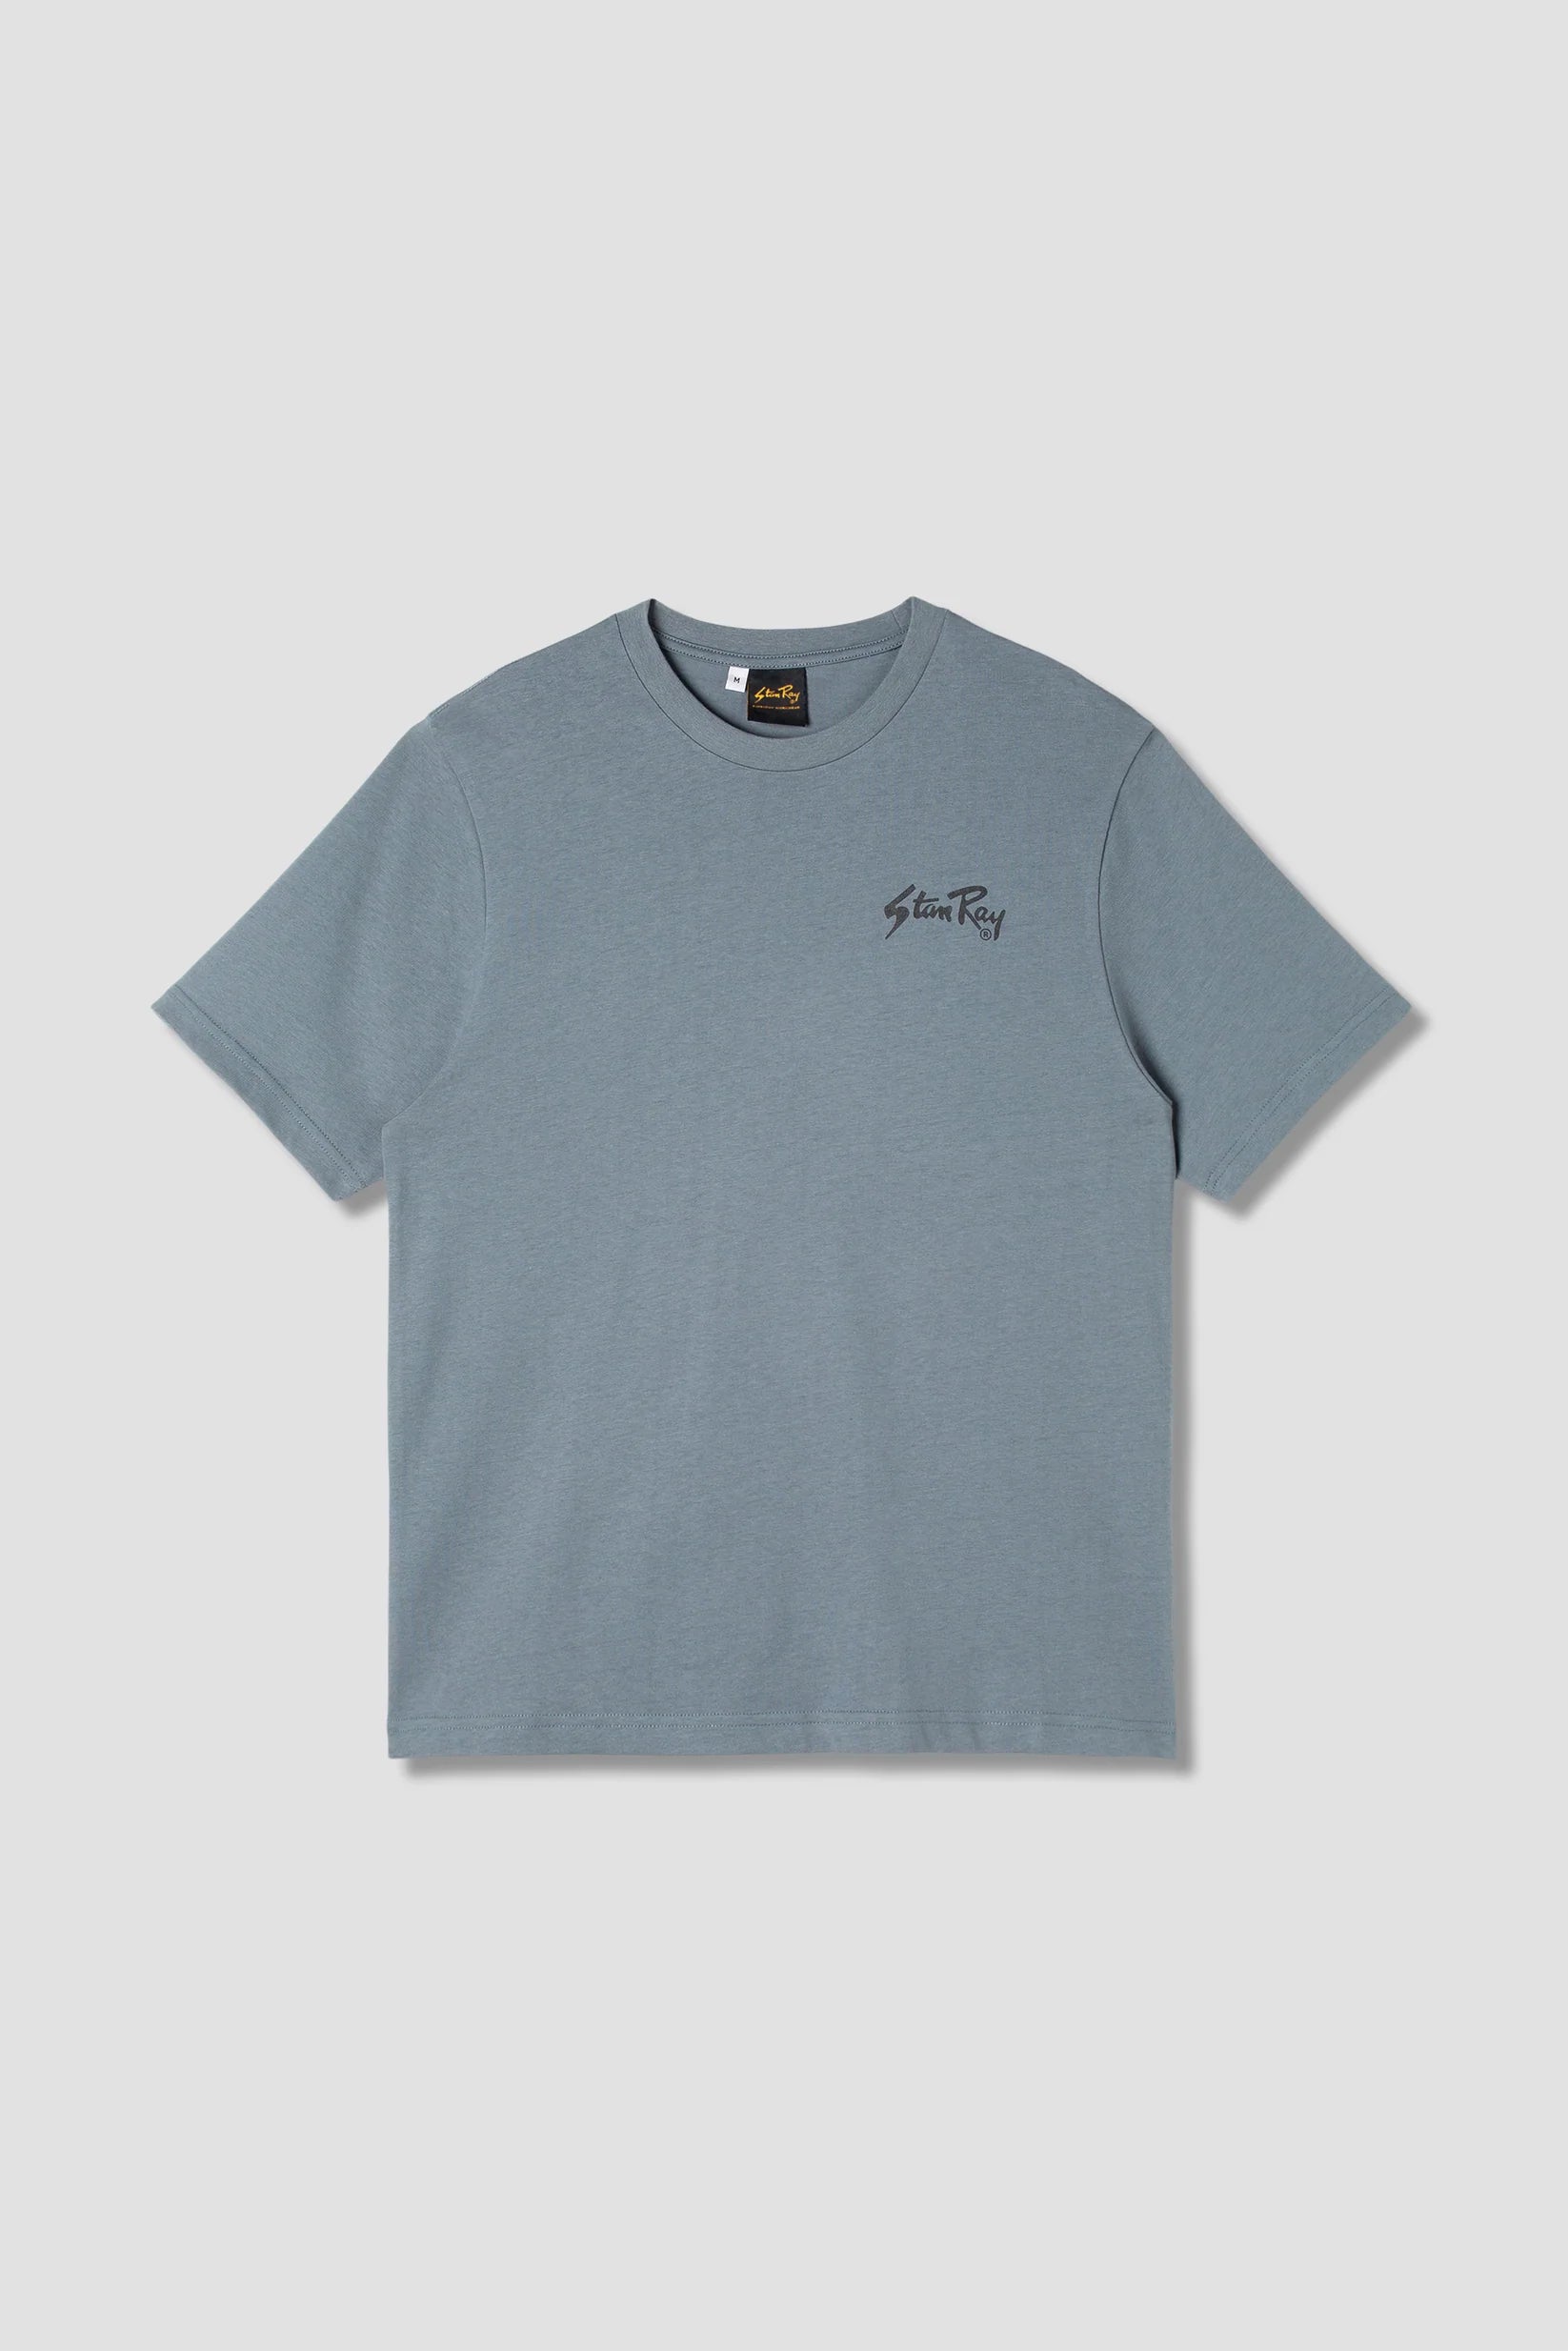 Stan Ray OG T-shirt - Battle Grey